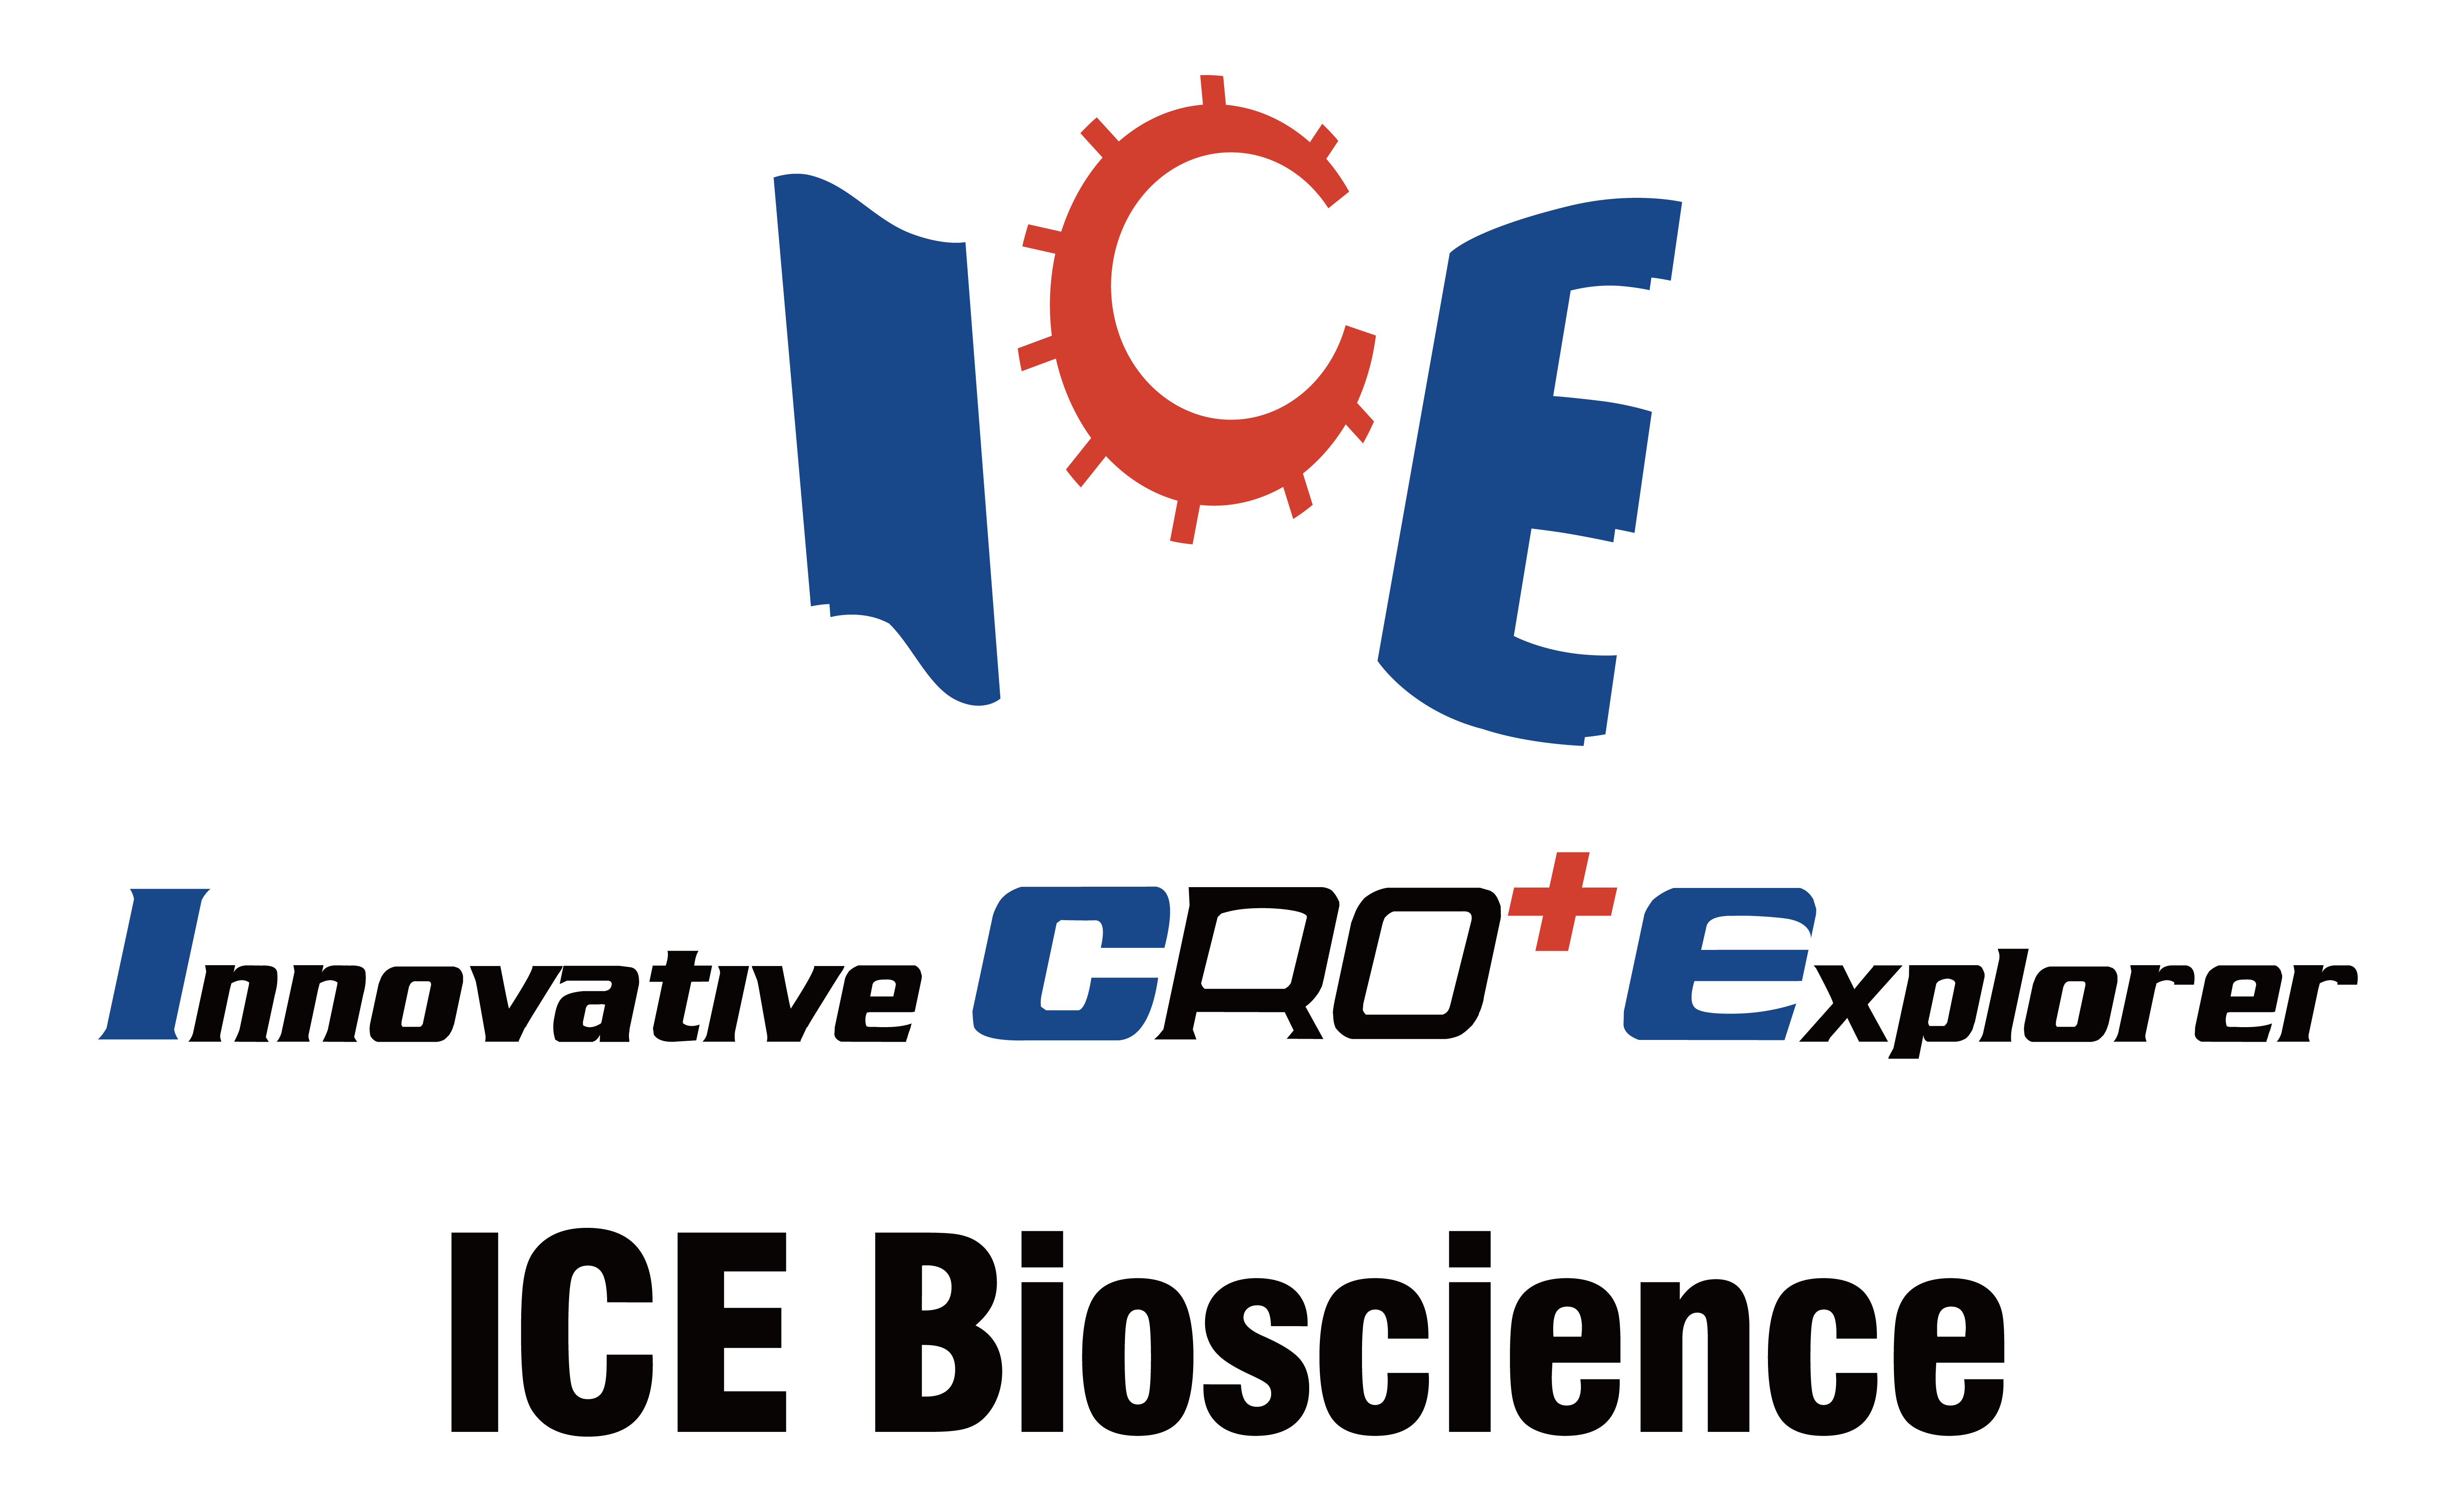 ICE Bioscience logo HD